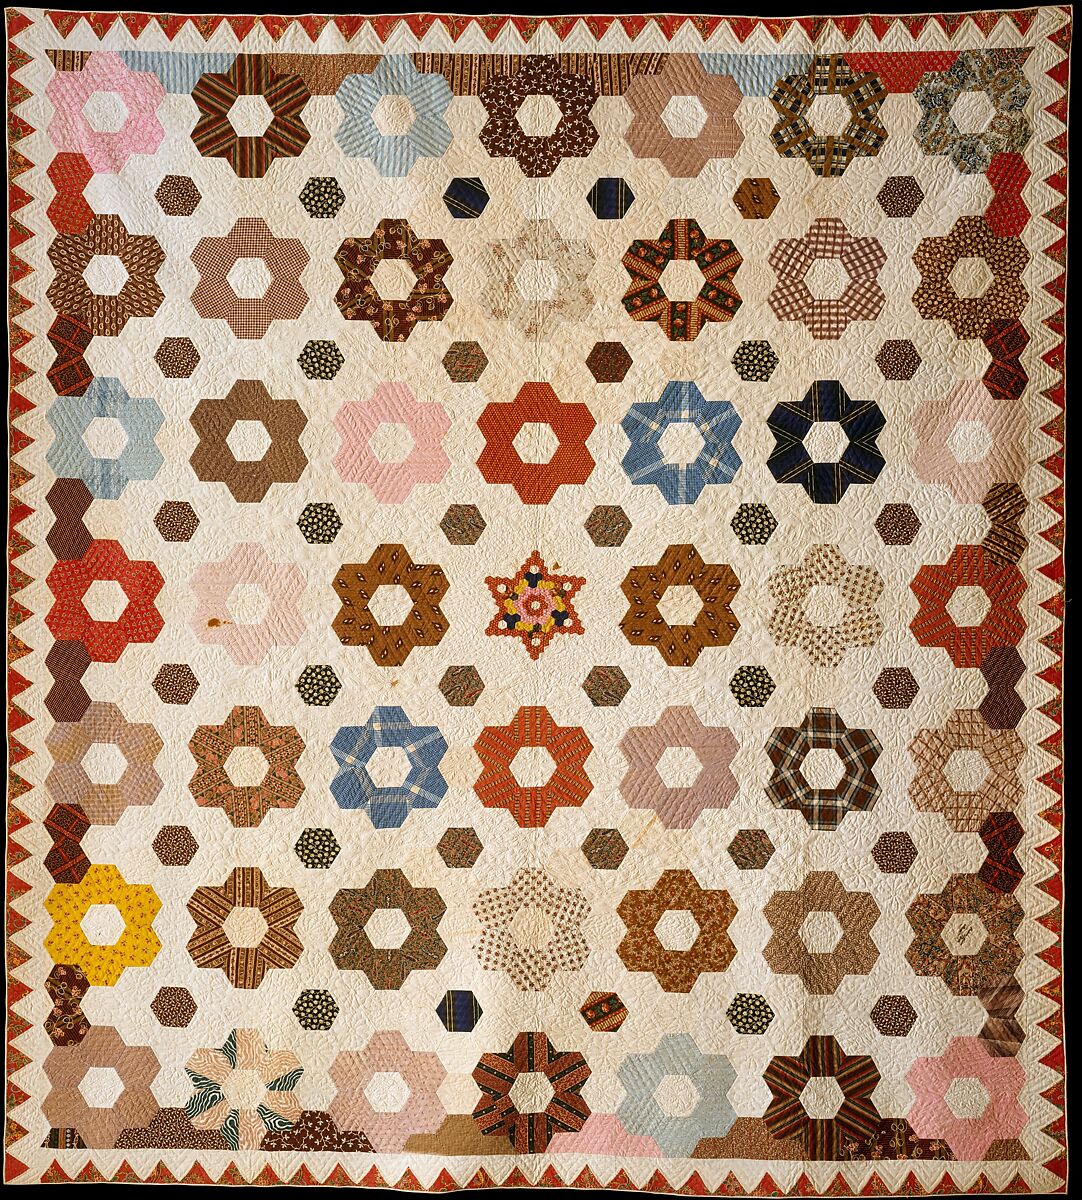 Quilt, Hexagon or Honeycomb pattern, Rebecca Davis, Cotton, American 